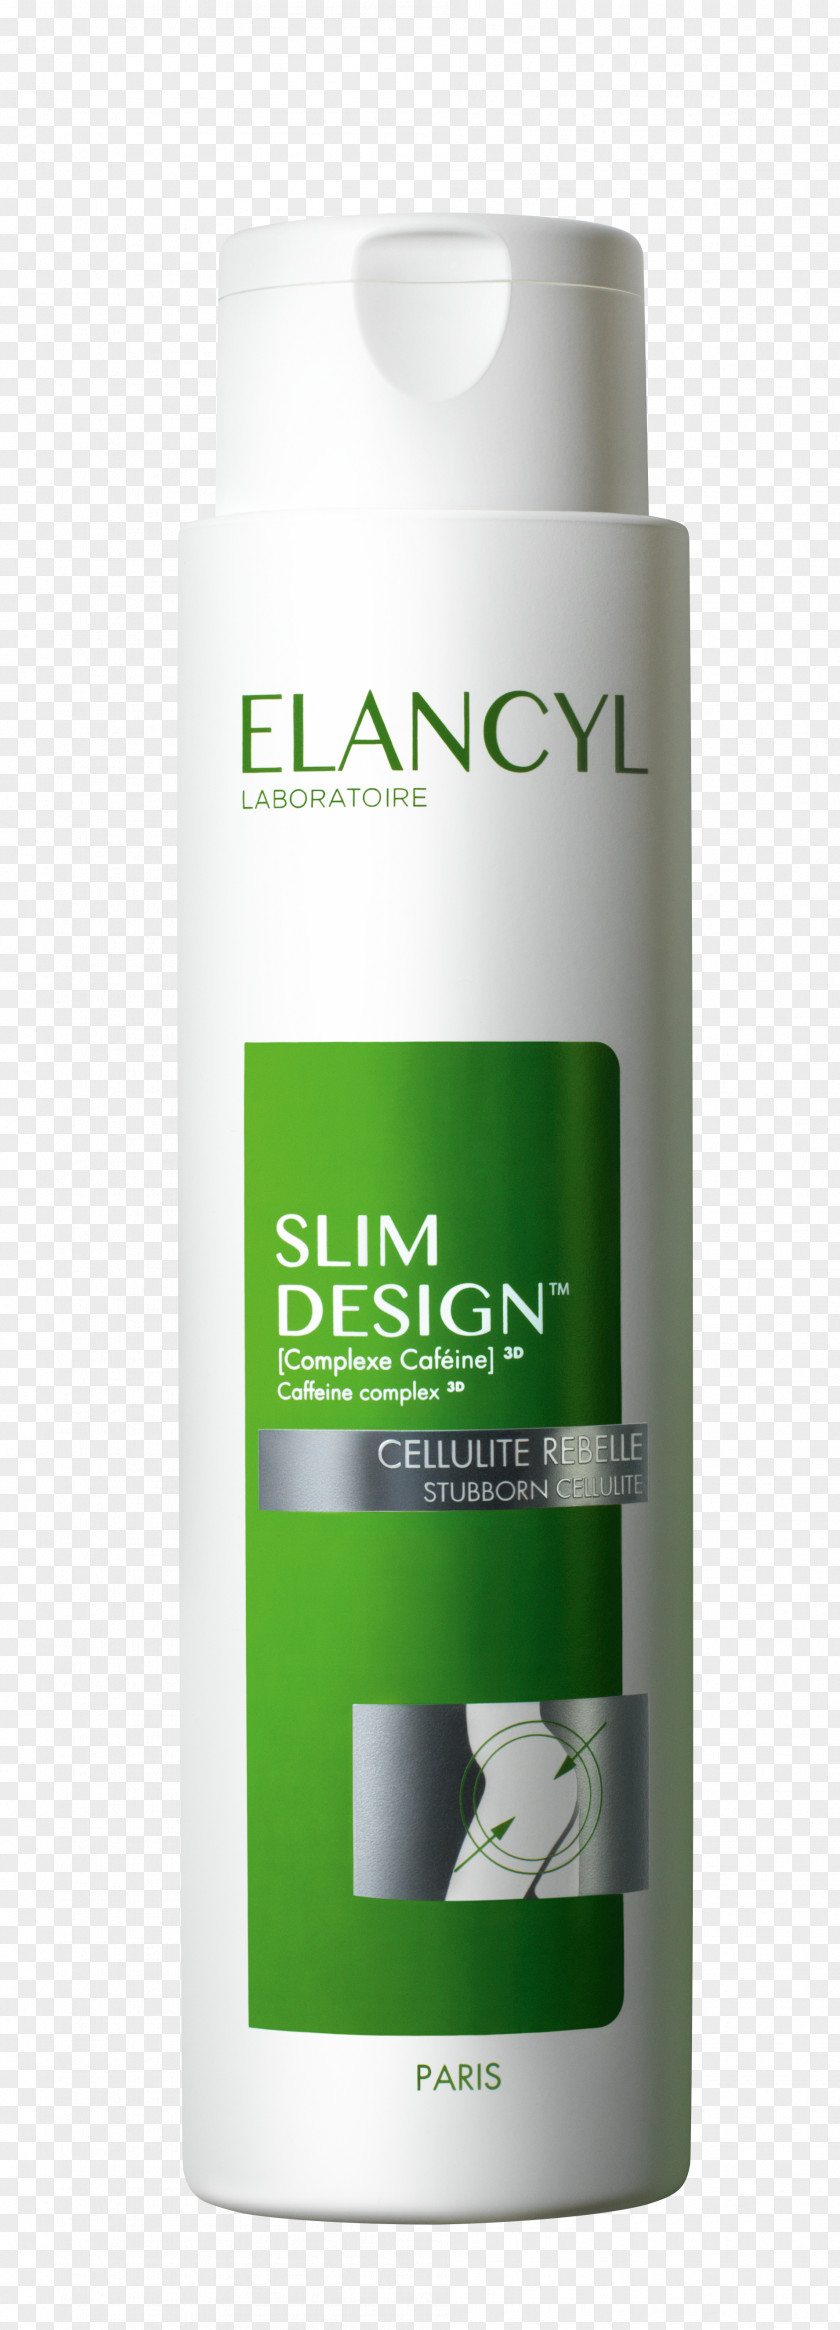 Elancyl Slim Design Soi Anti-cellulite Rebelle Milliliter Architecture Plan PNG